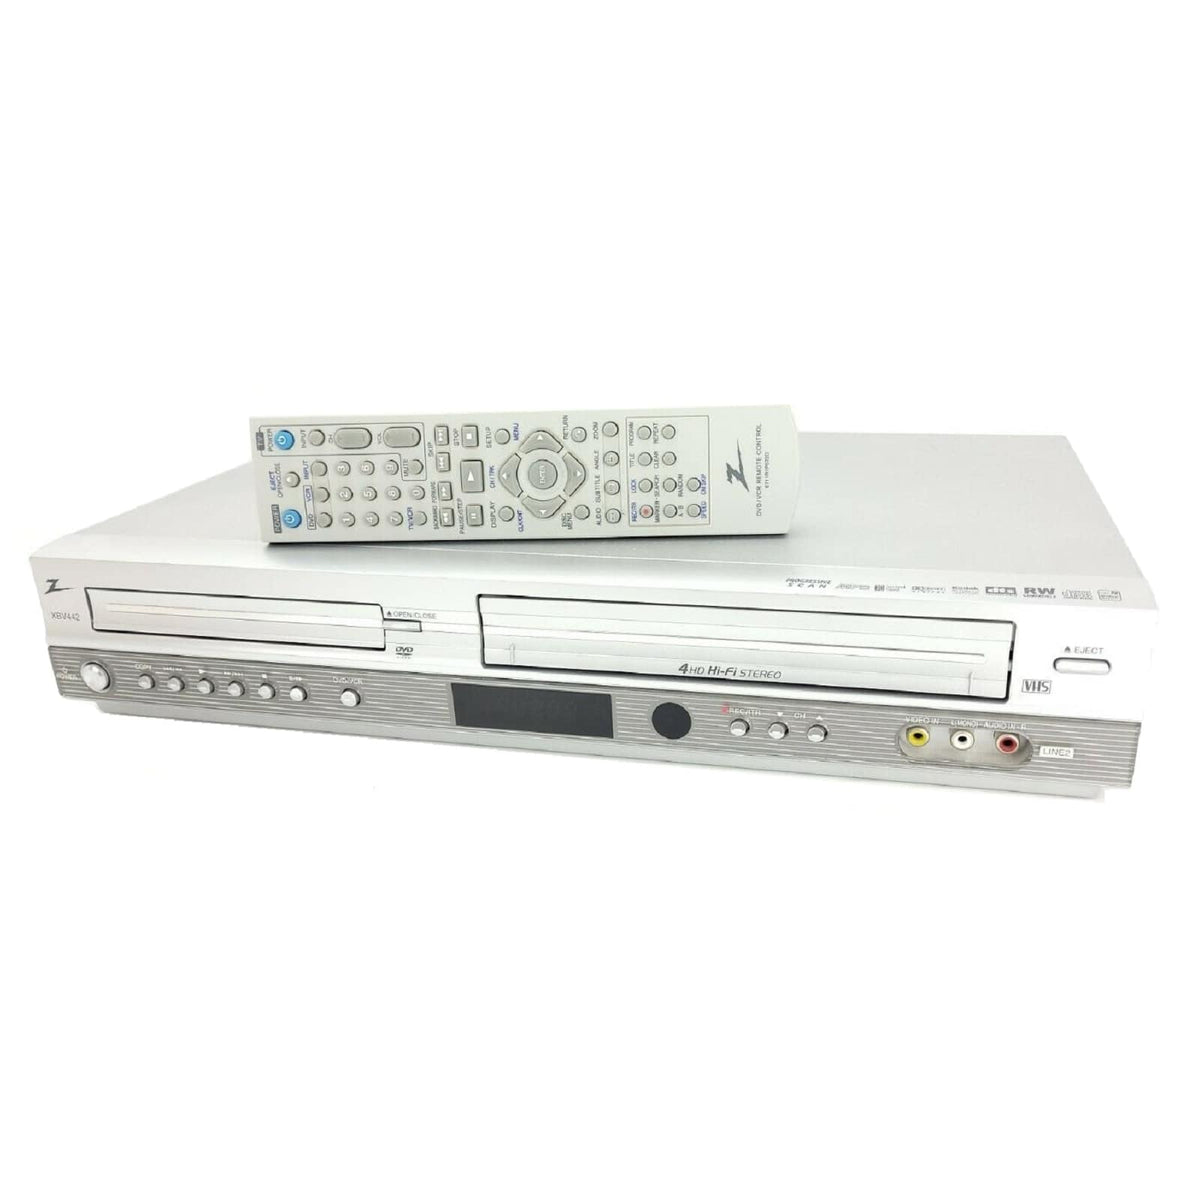 Zenith XBV442 Progressive-Scan DVD VCR Combo